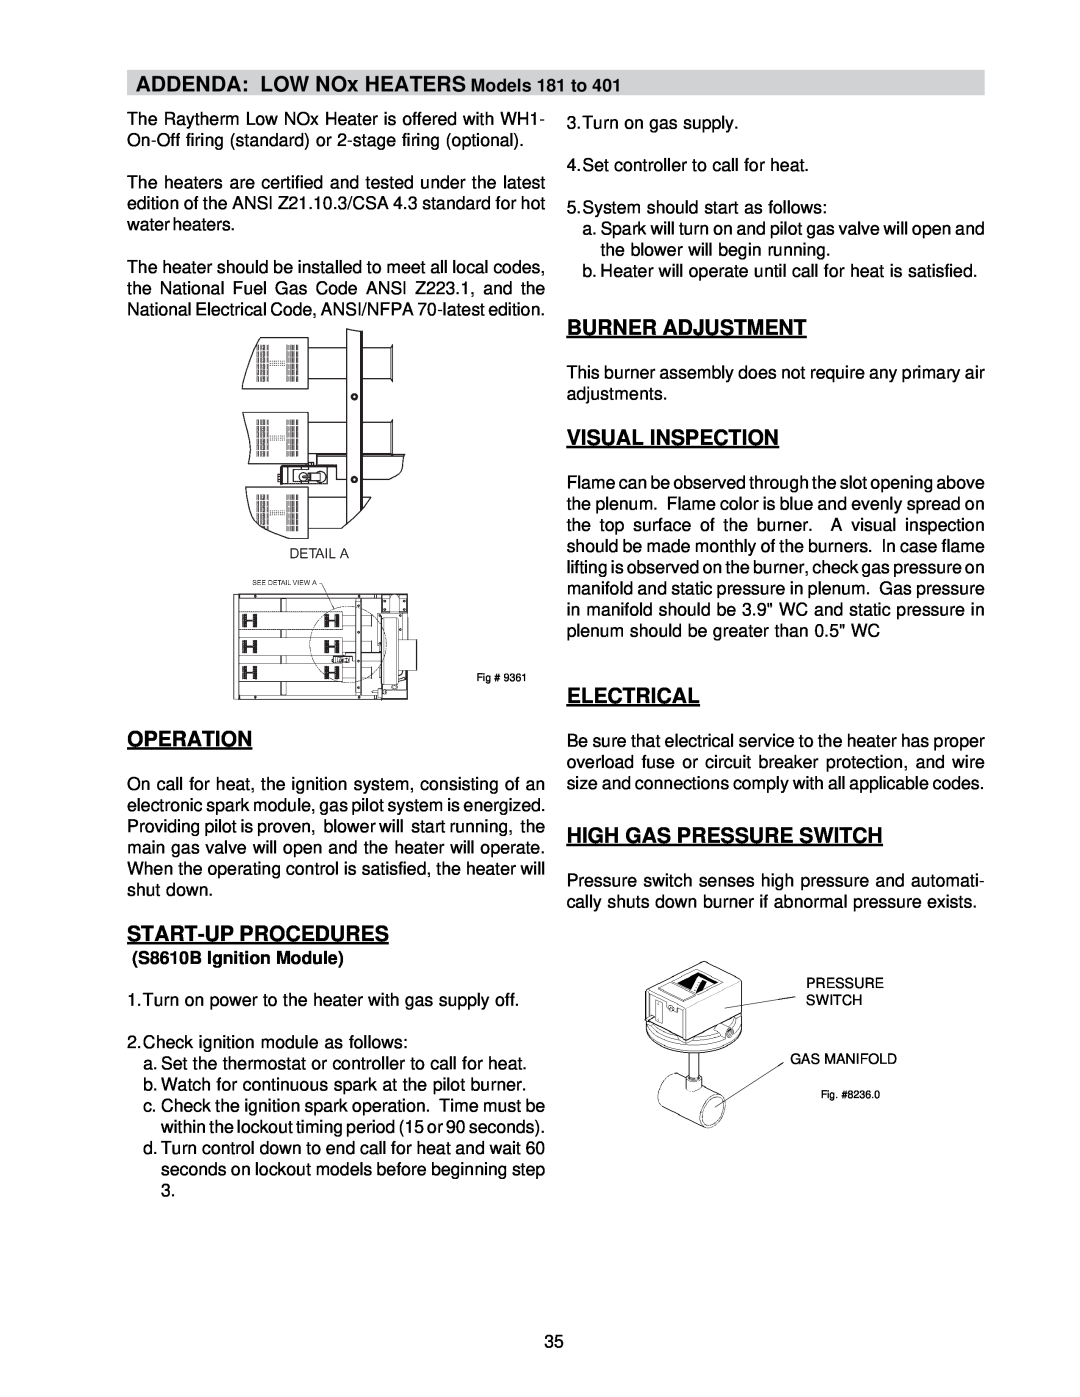 Raypak 0133-4001 manual ADDENDA LOW NOx HEATERS Models 181 to, Burner Adjustment, Visual Inspection, Operation, Electrical 